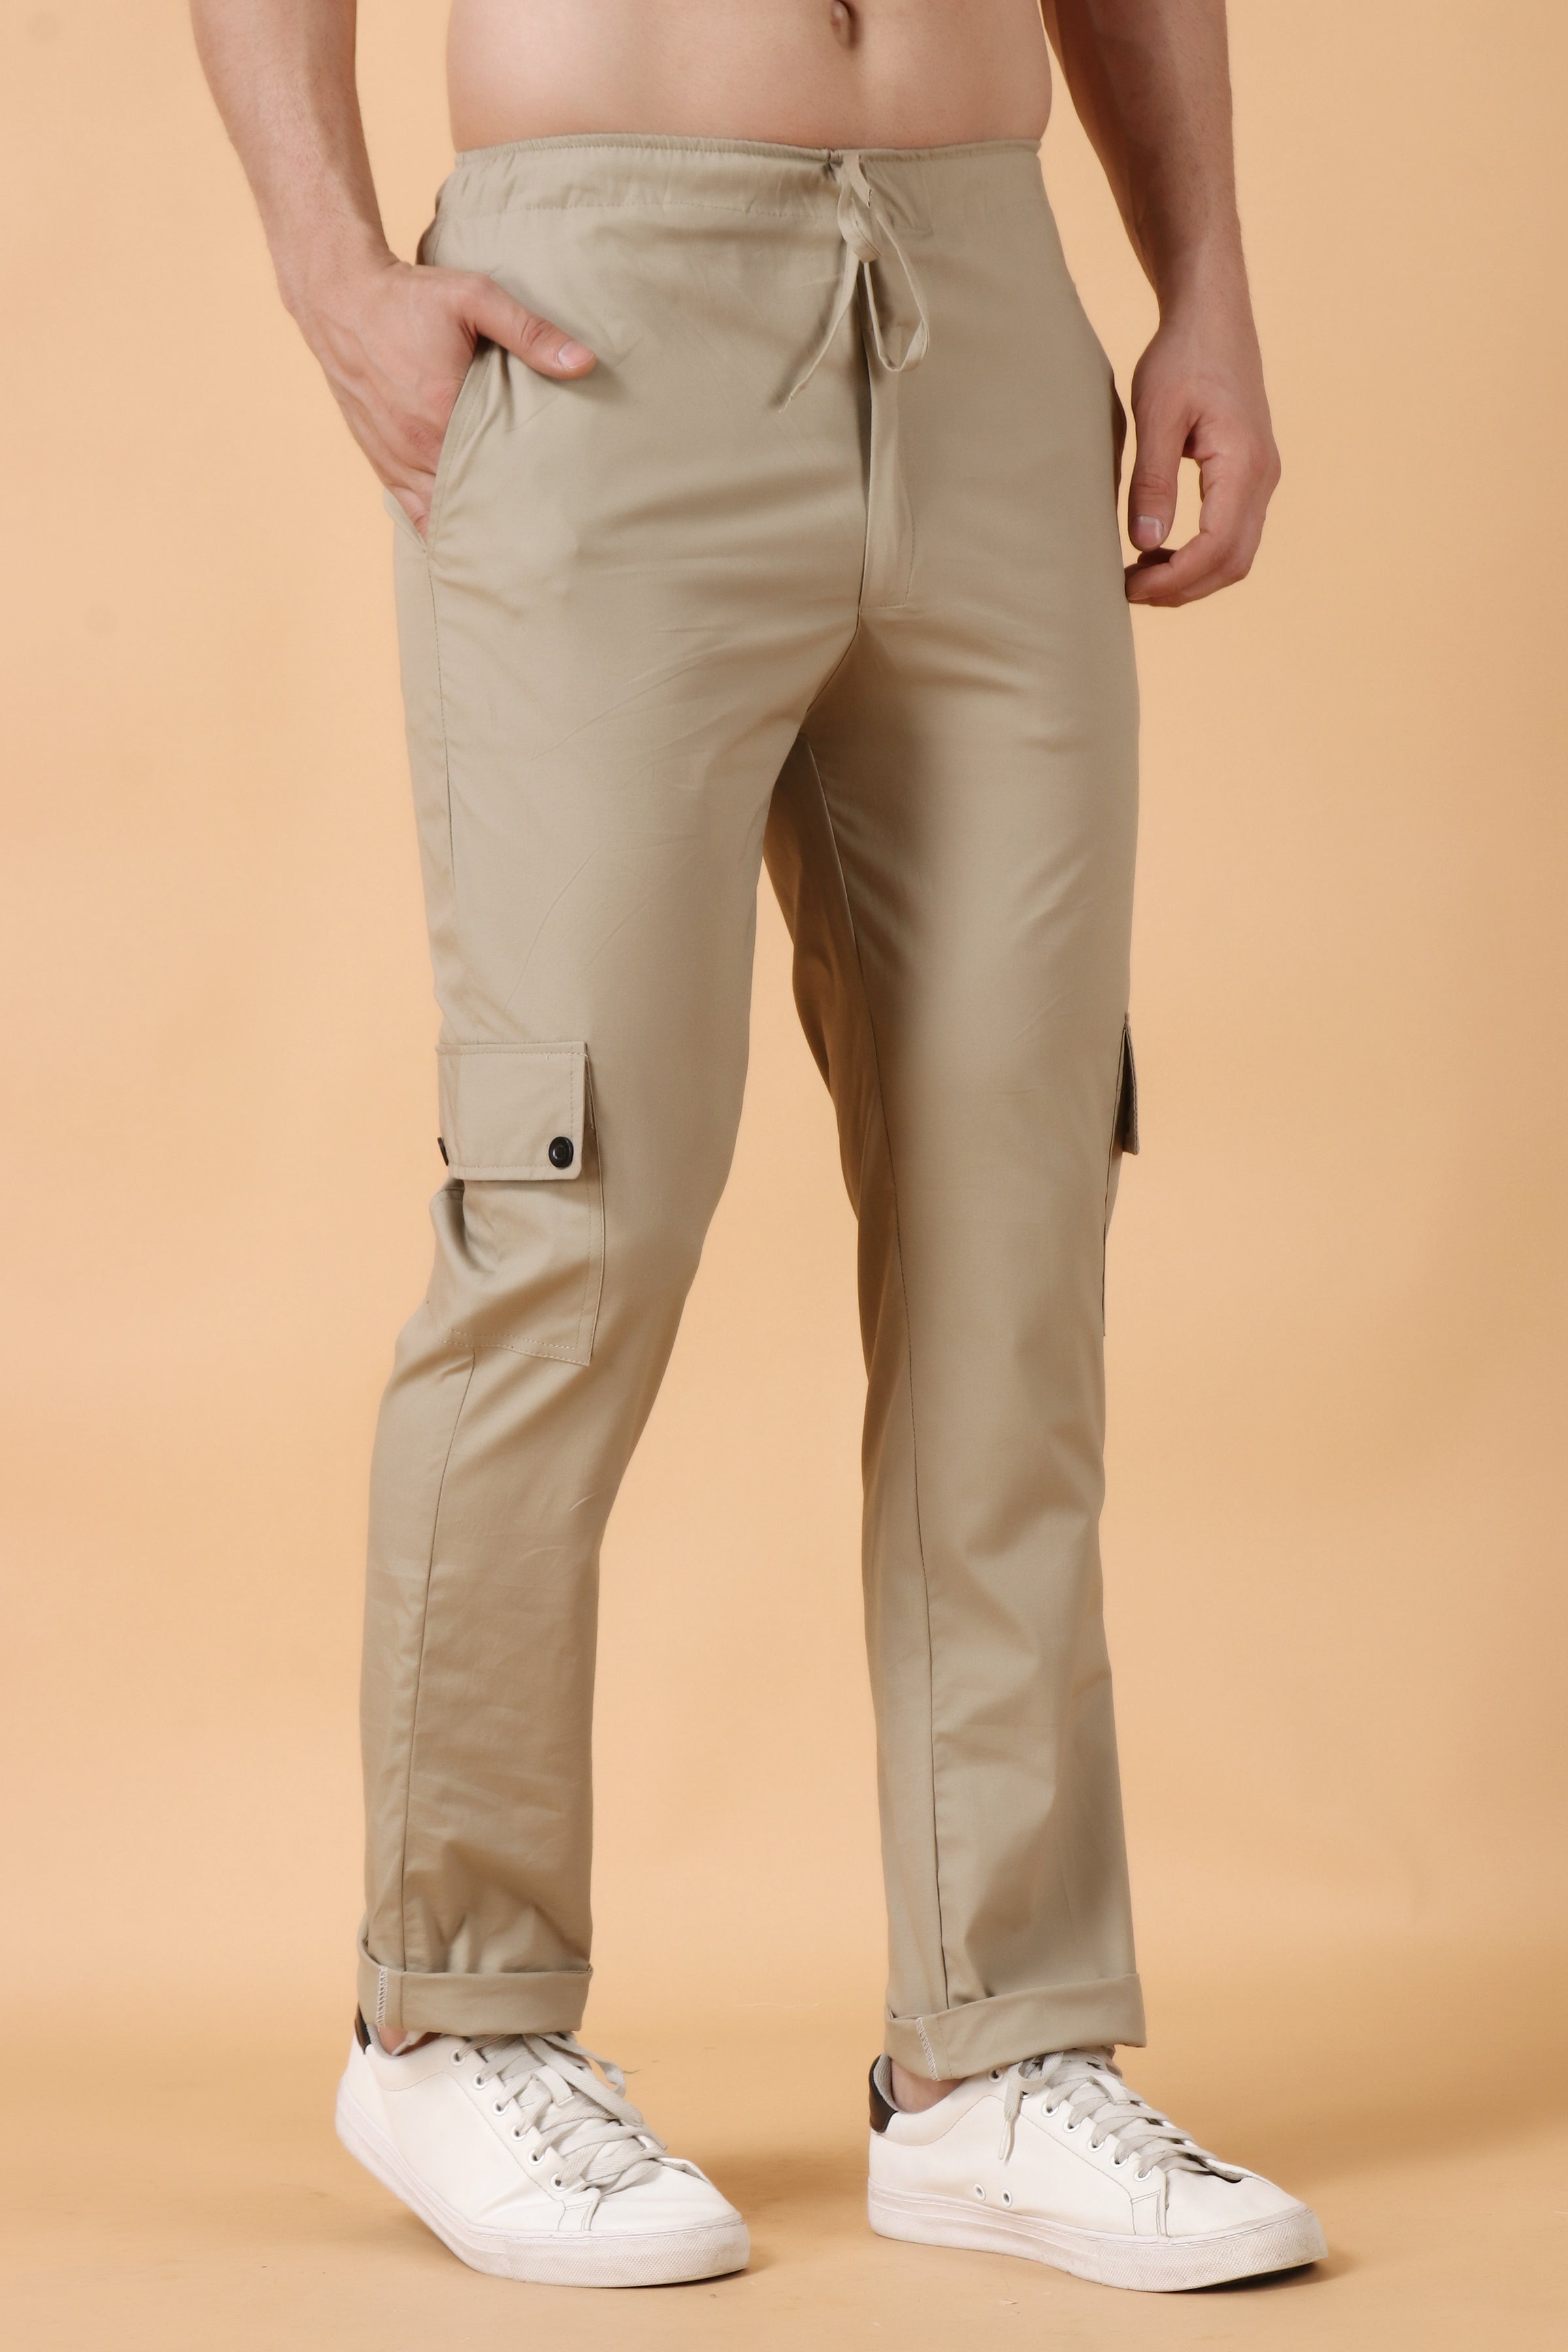 OrSlow US Army Regular Fit Fatigue Pants - Green Reverse Cotton Sateen |  Garmentory